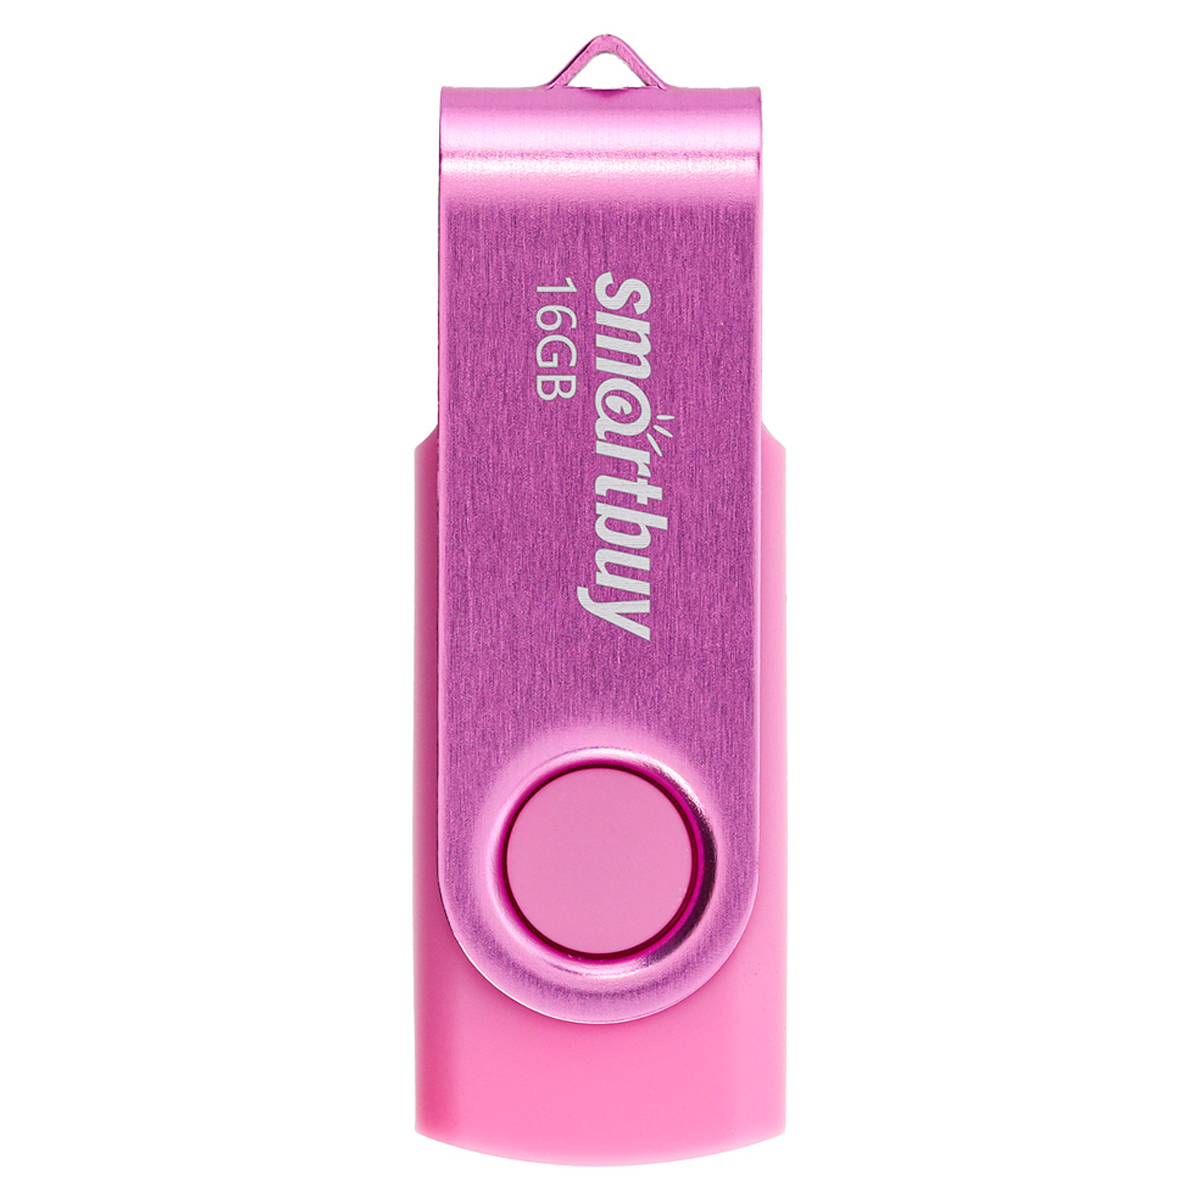 Память Smart Buy "Twist" 16GB, USB 2.0 Flash Drive, пурпурный